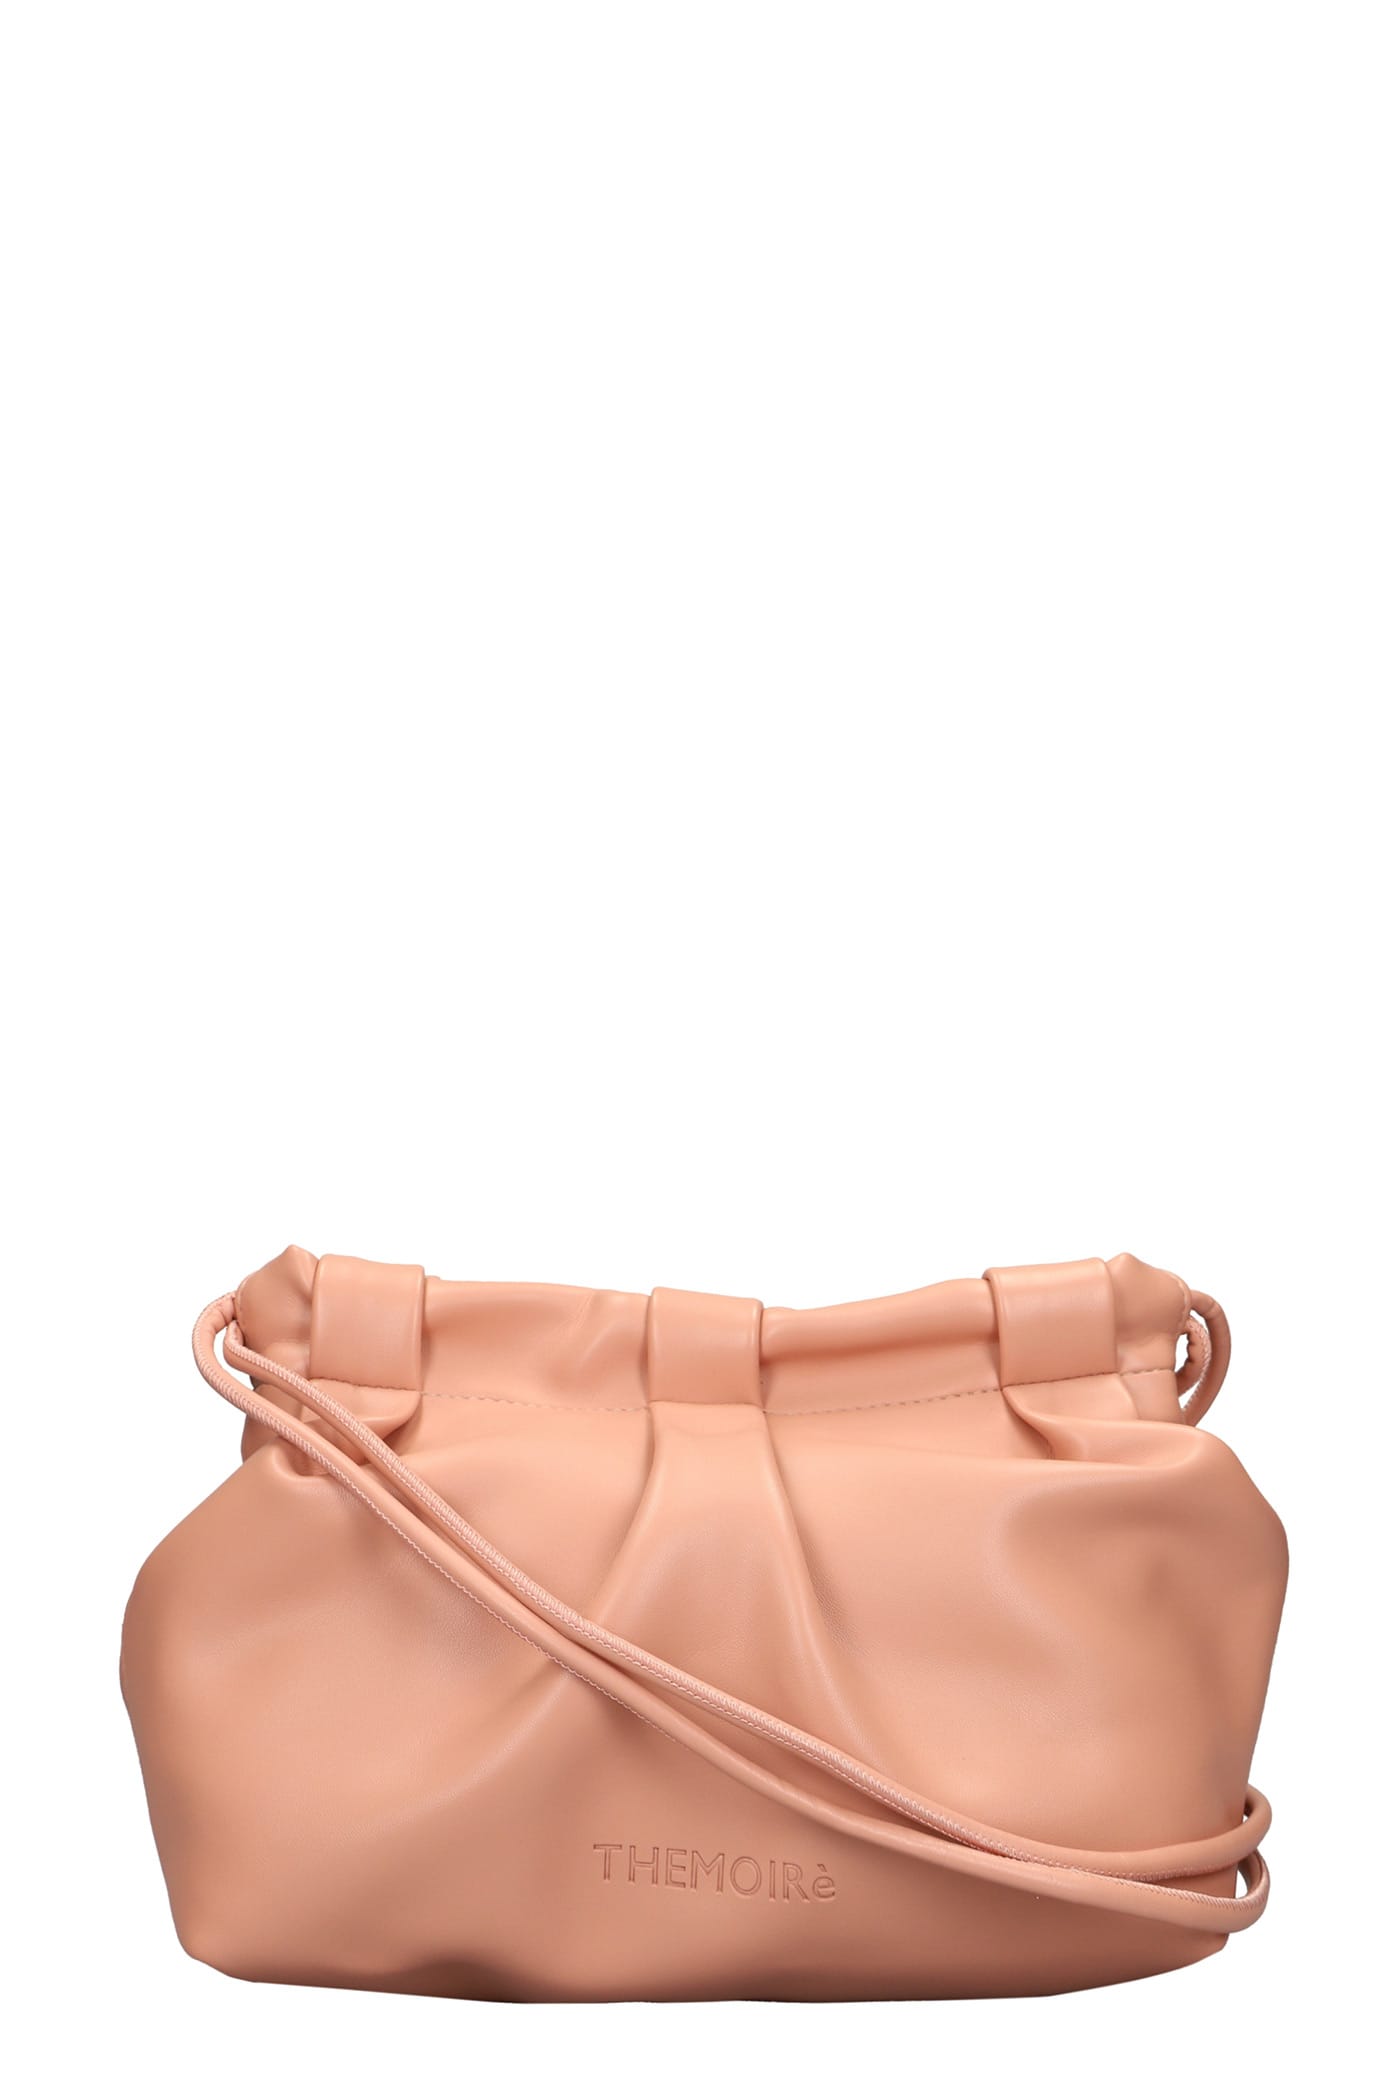 THEMOIRè Thetis Basic Shoulder Bag In Powder Leather